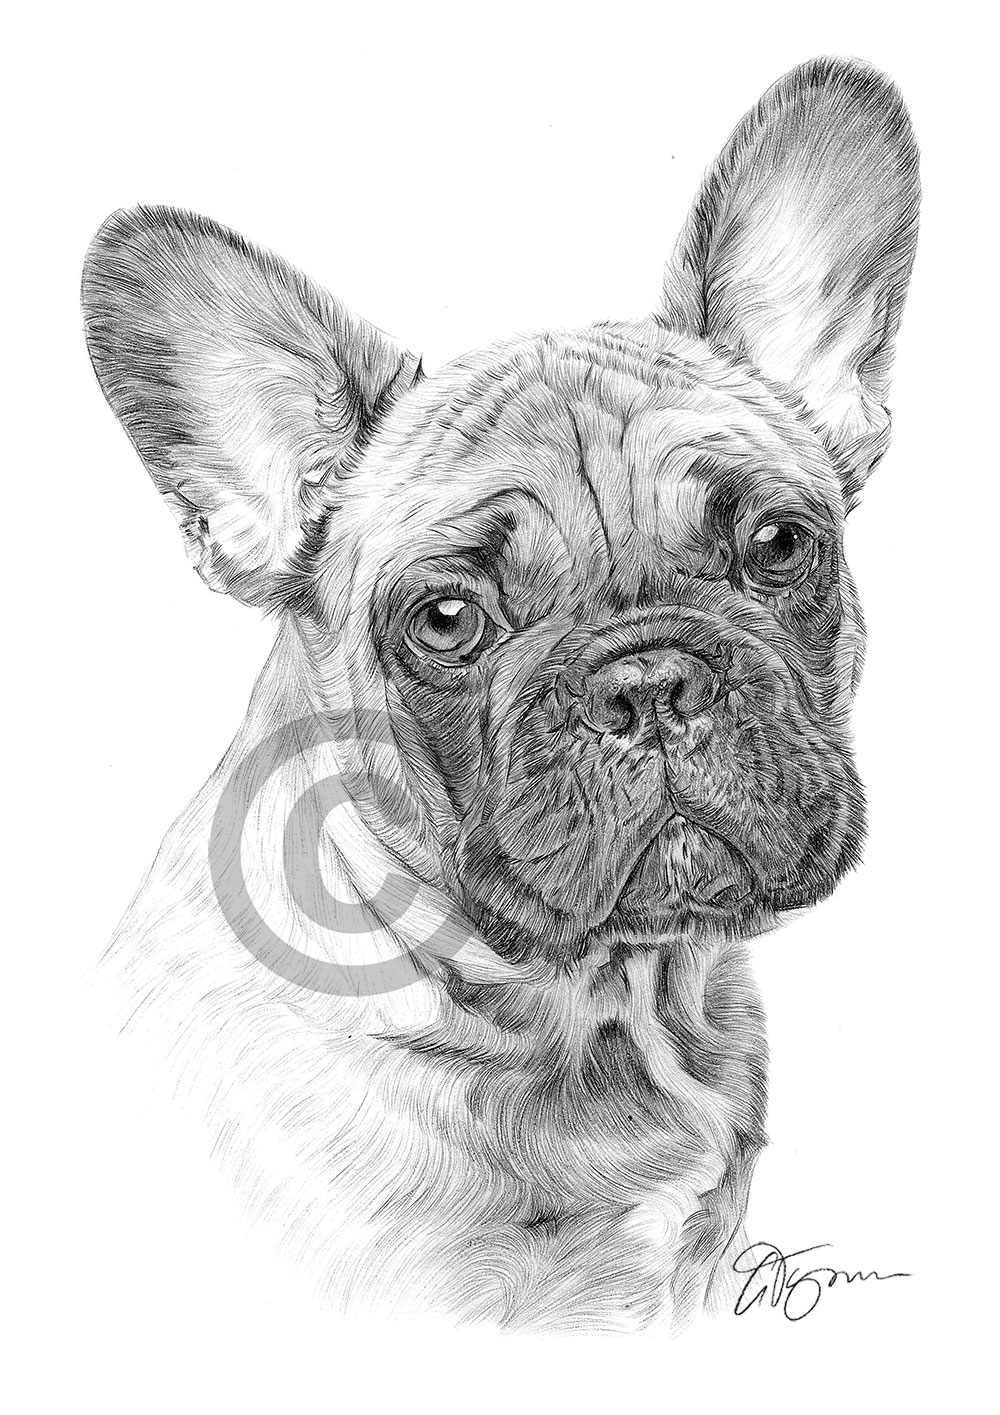 Pencil drawing of a French Bulldog by artist Gary Tymon